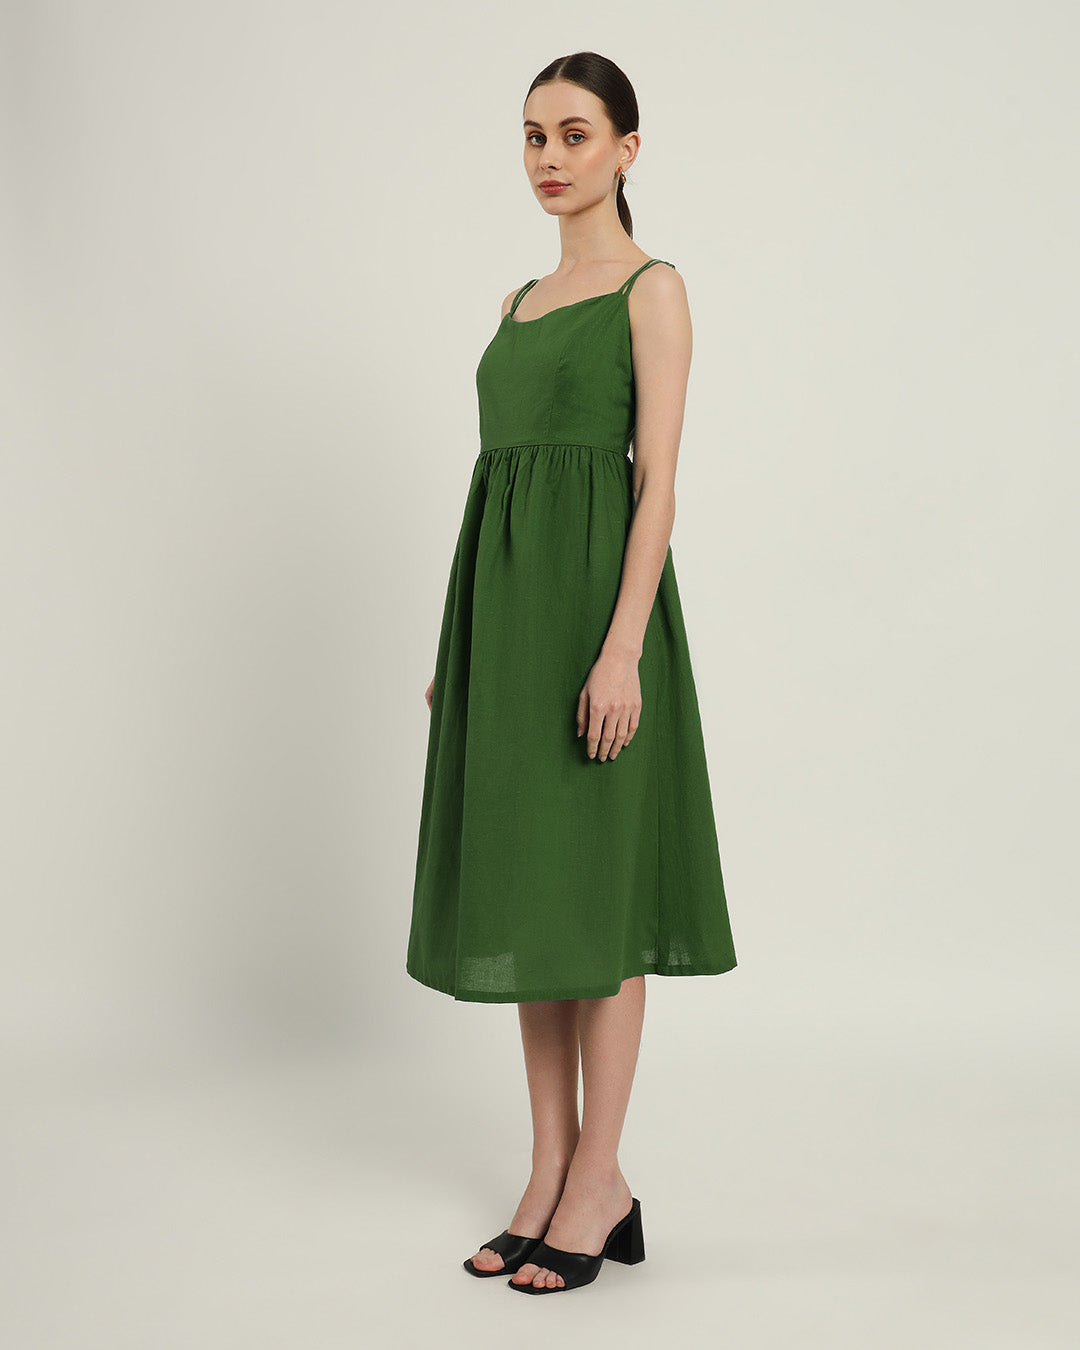 The Haiti Emerald Dress